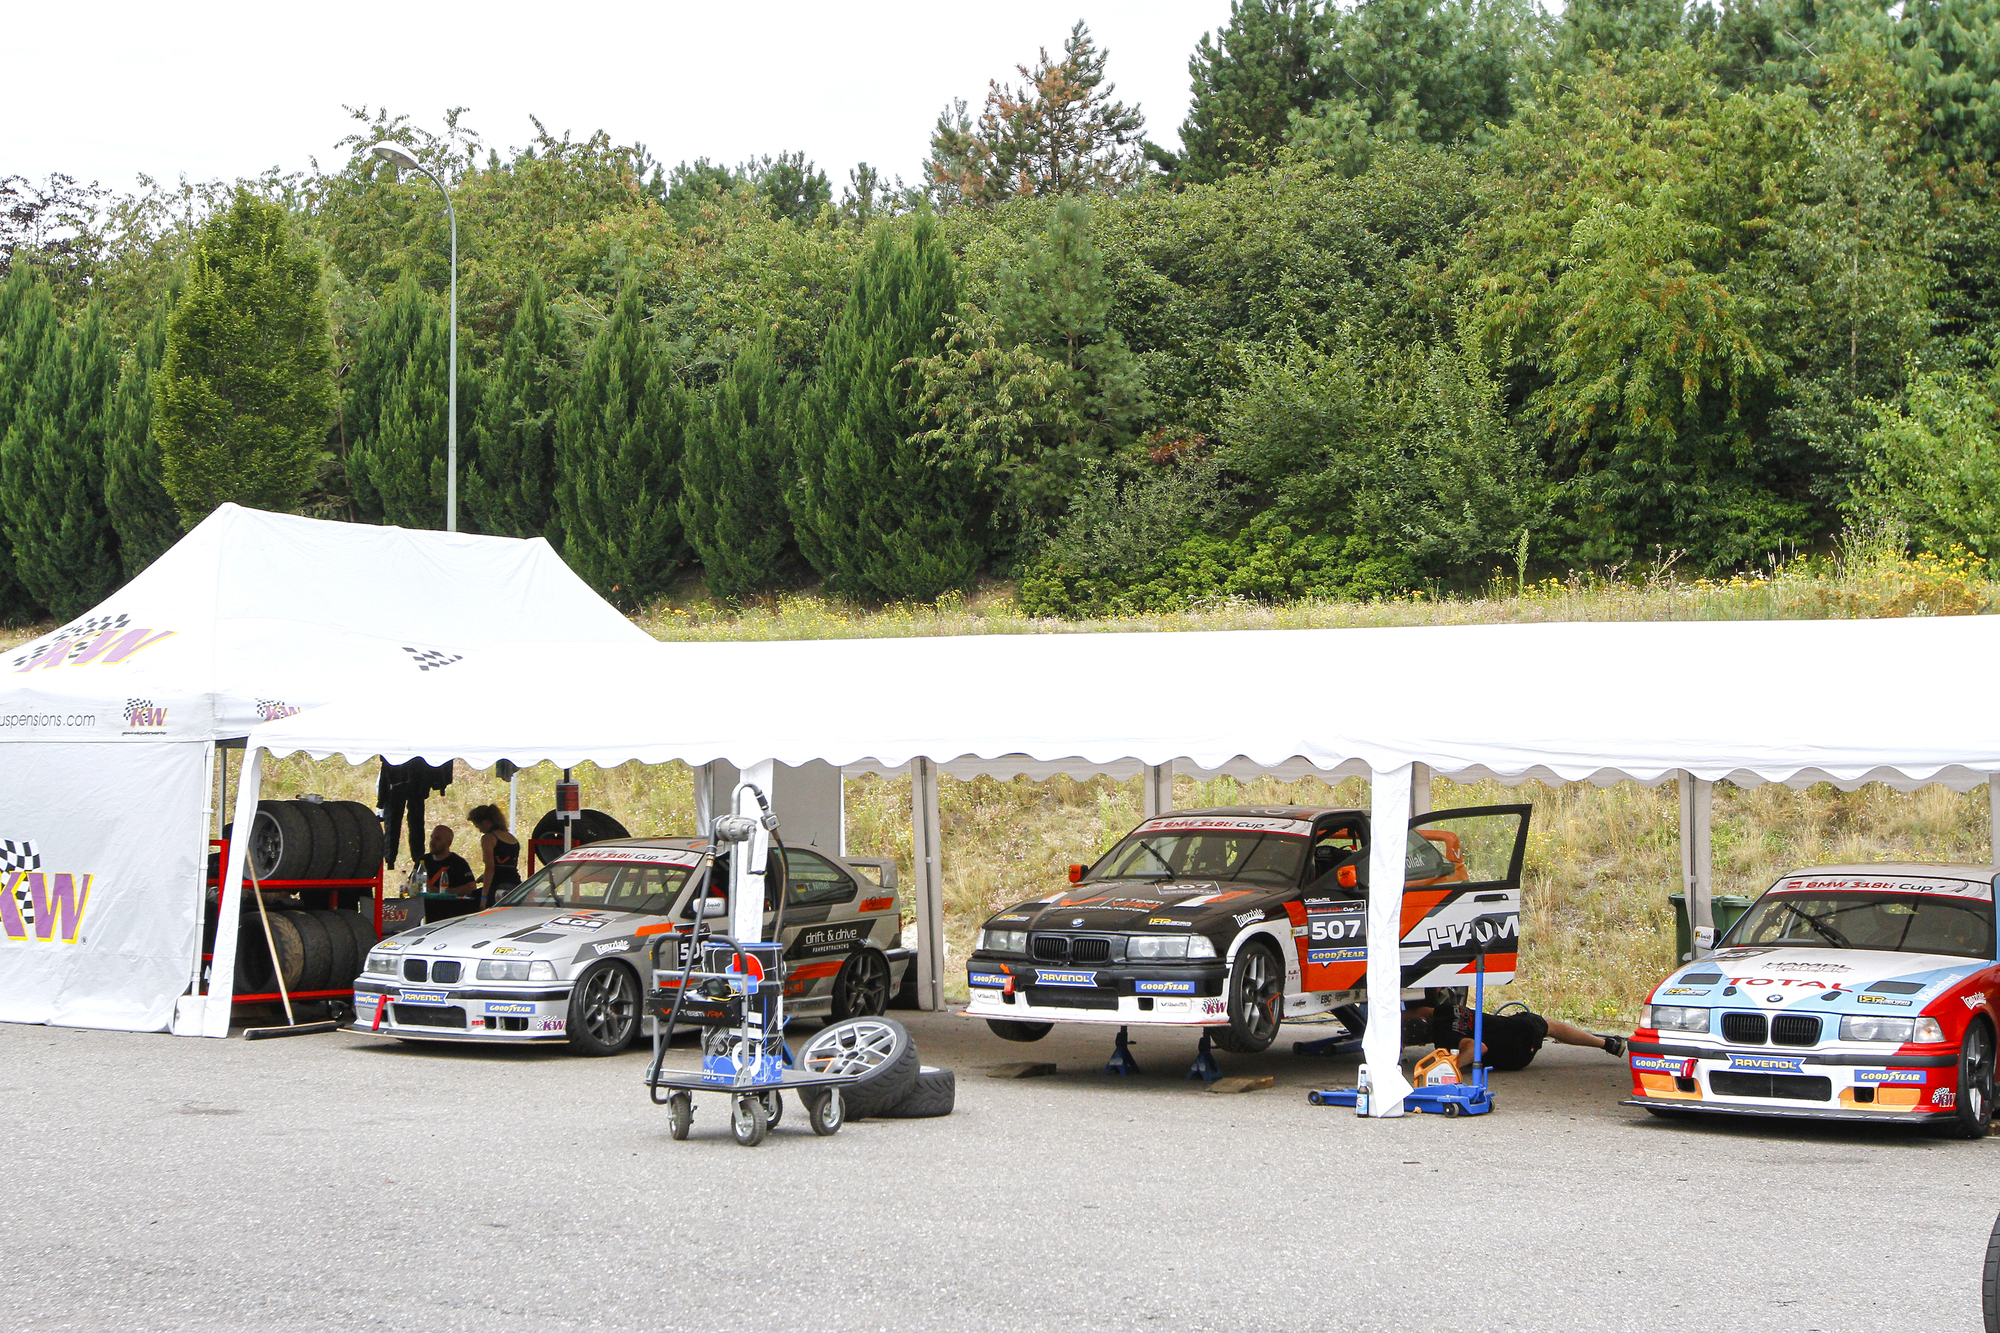 Cerny Motorsport GmbH